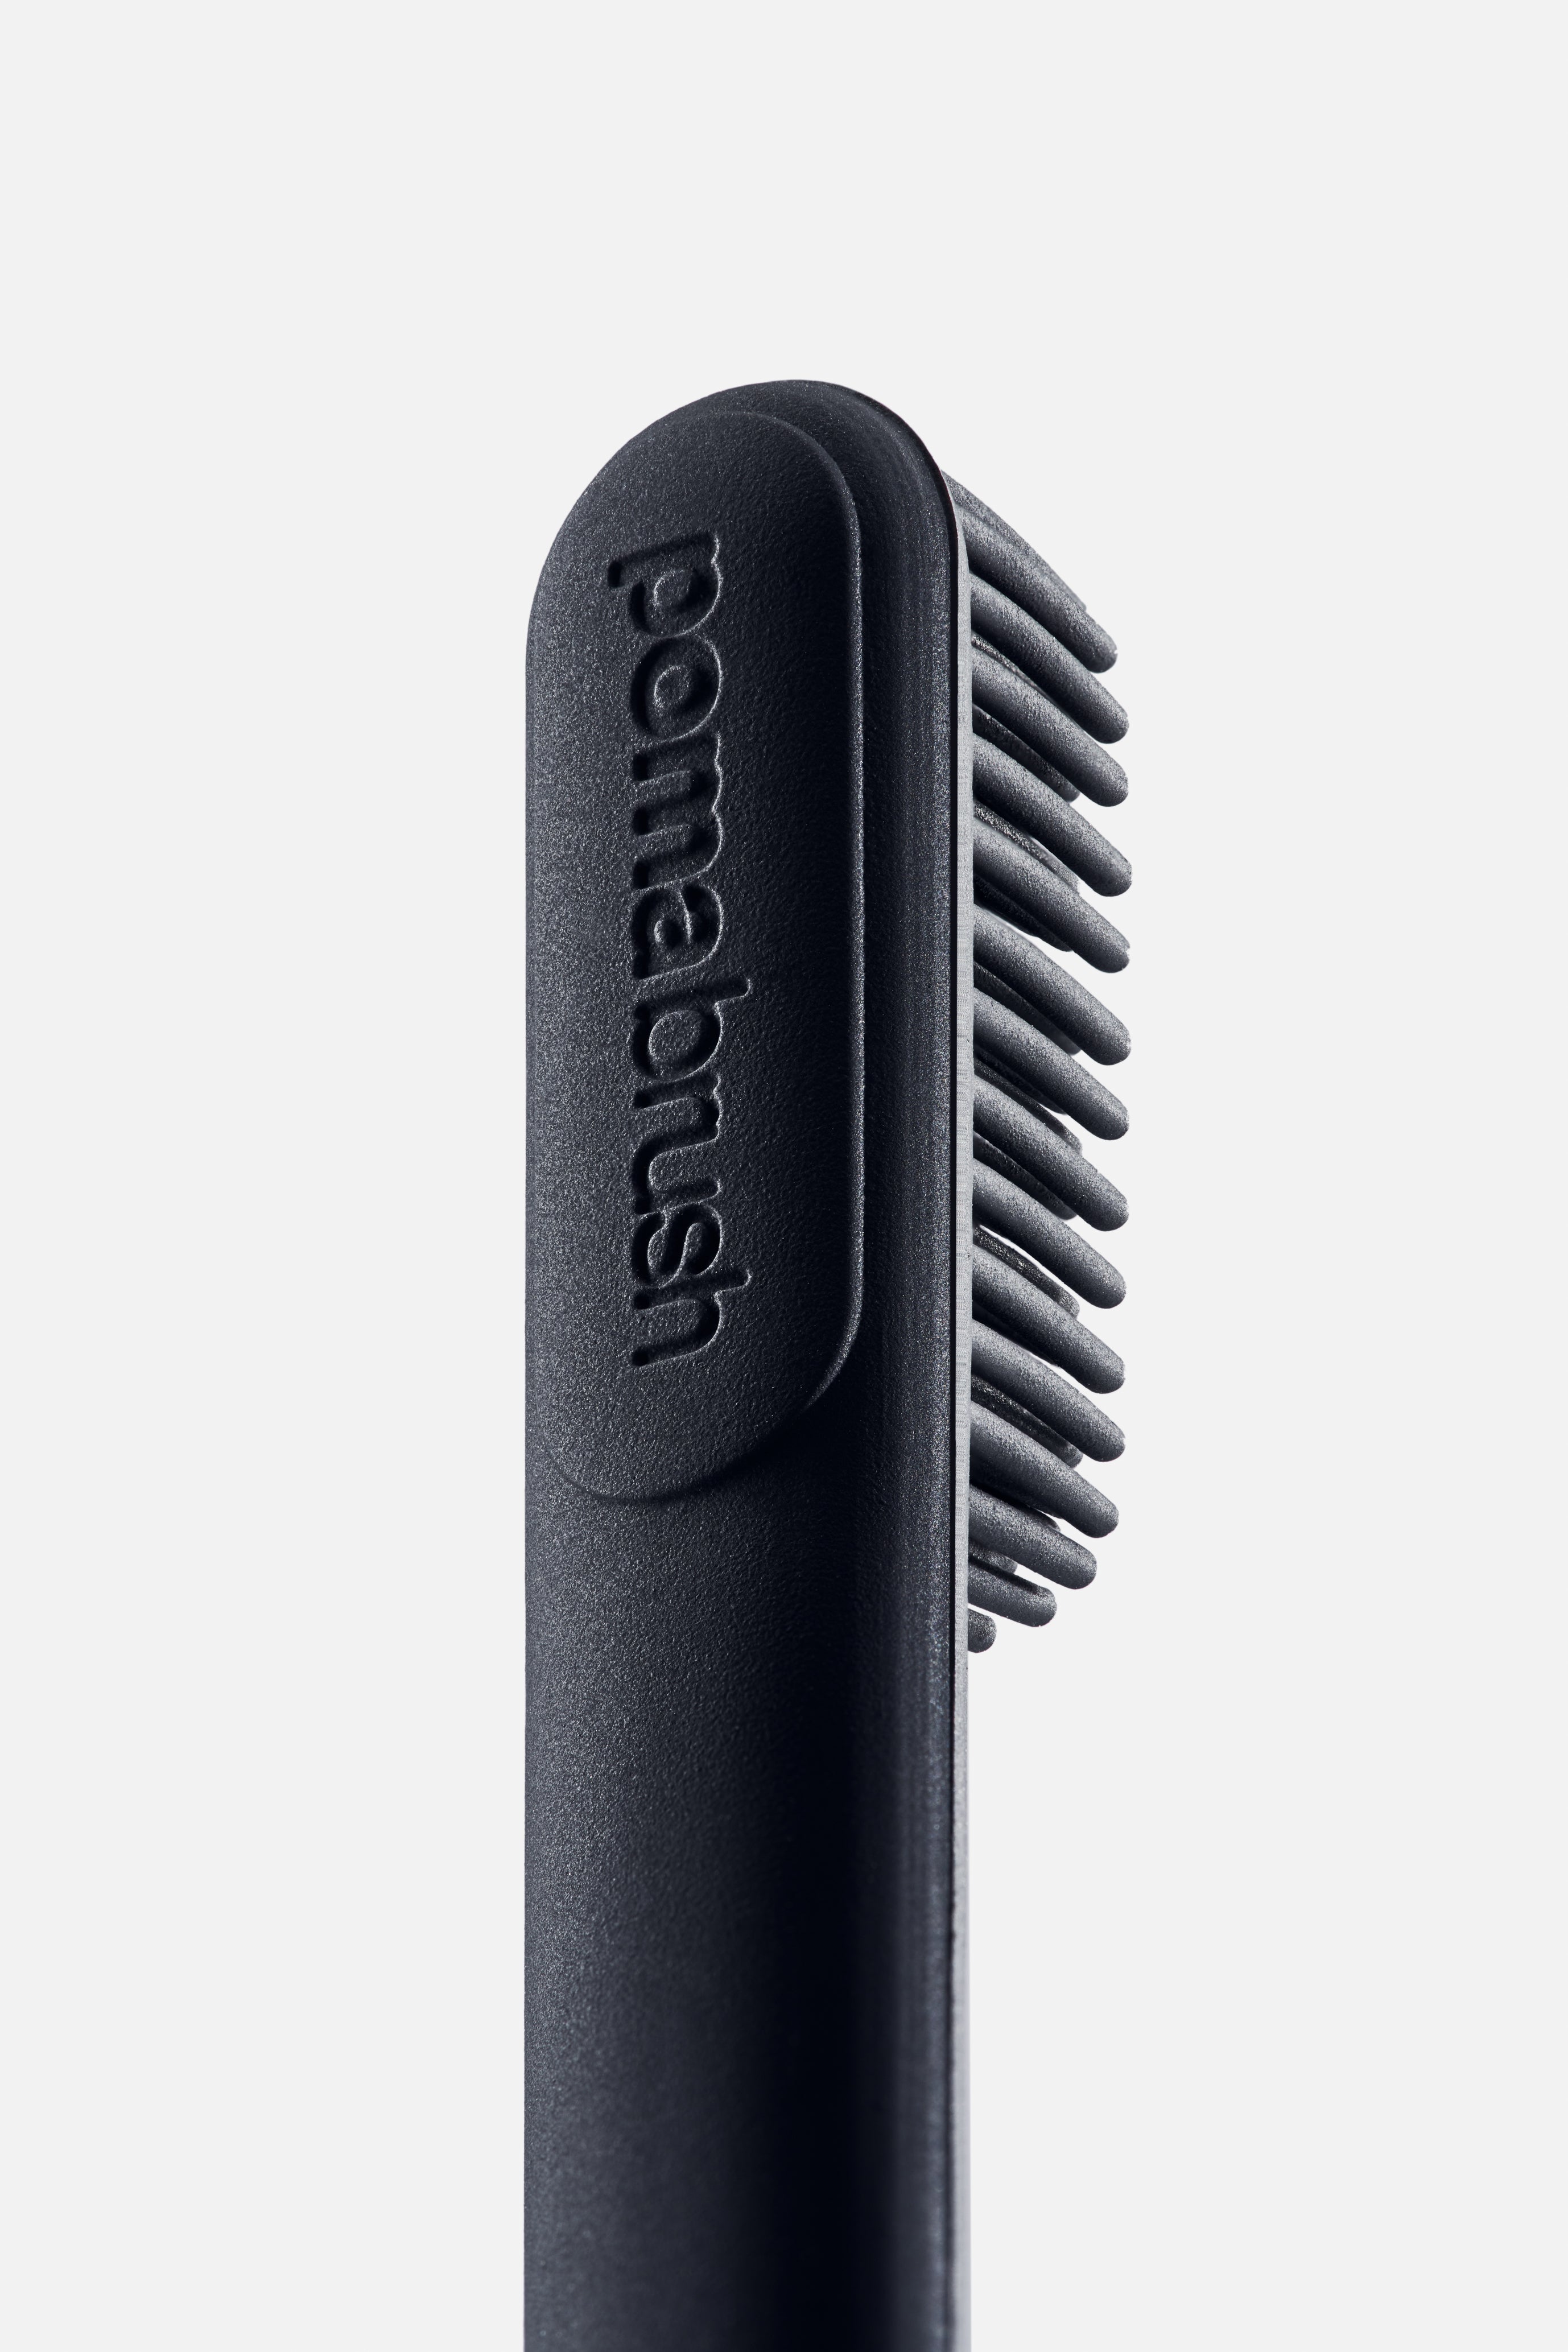 Pomabrush - Pure Silicone Brush Heads - Black (Pack of 2)